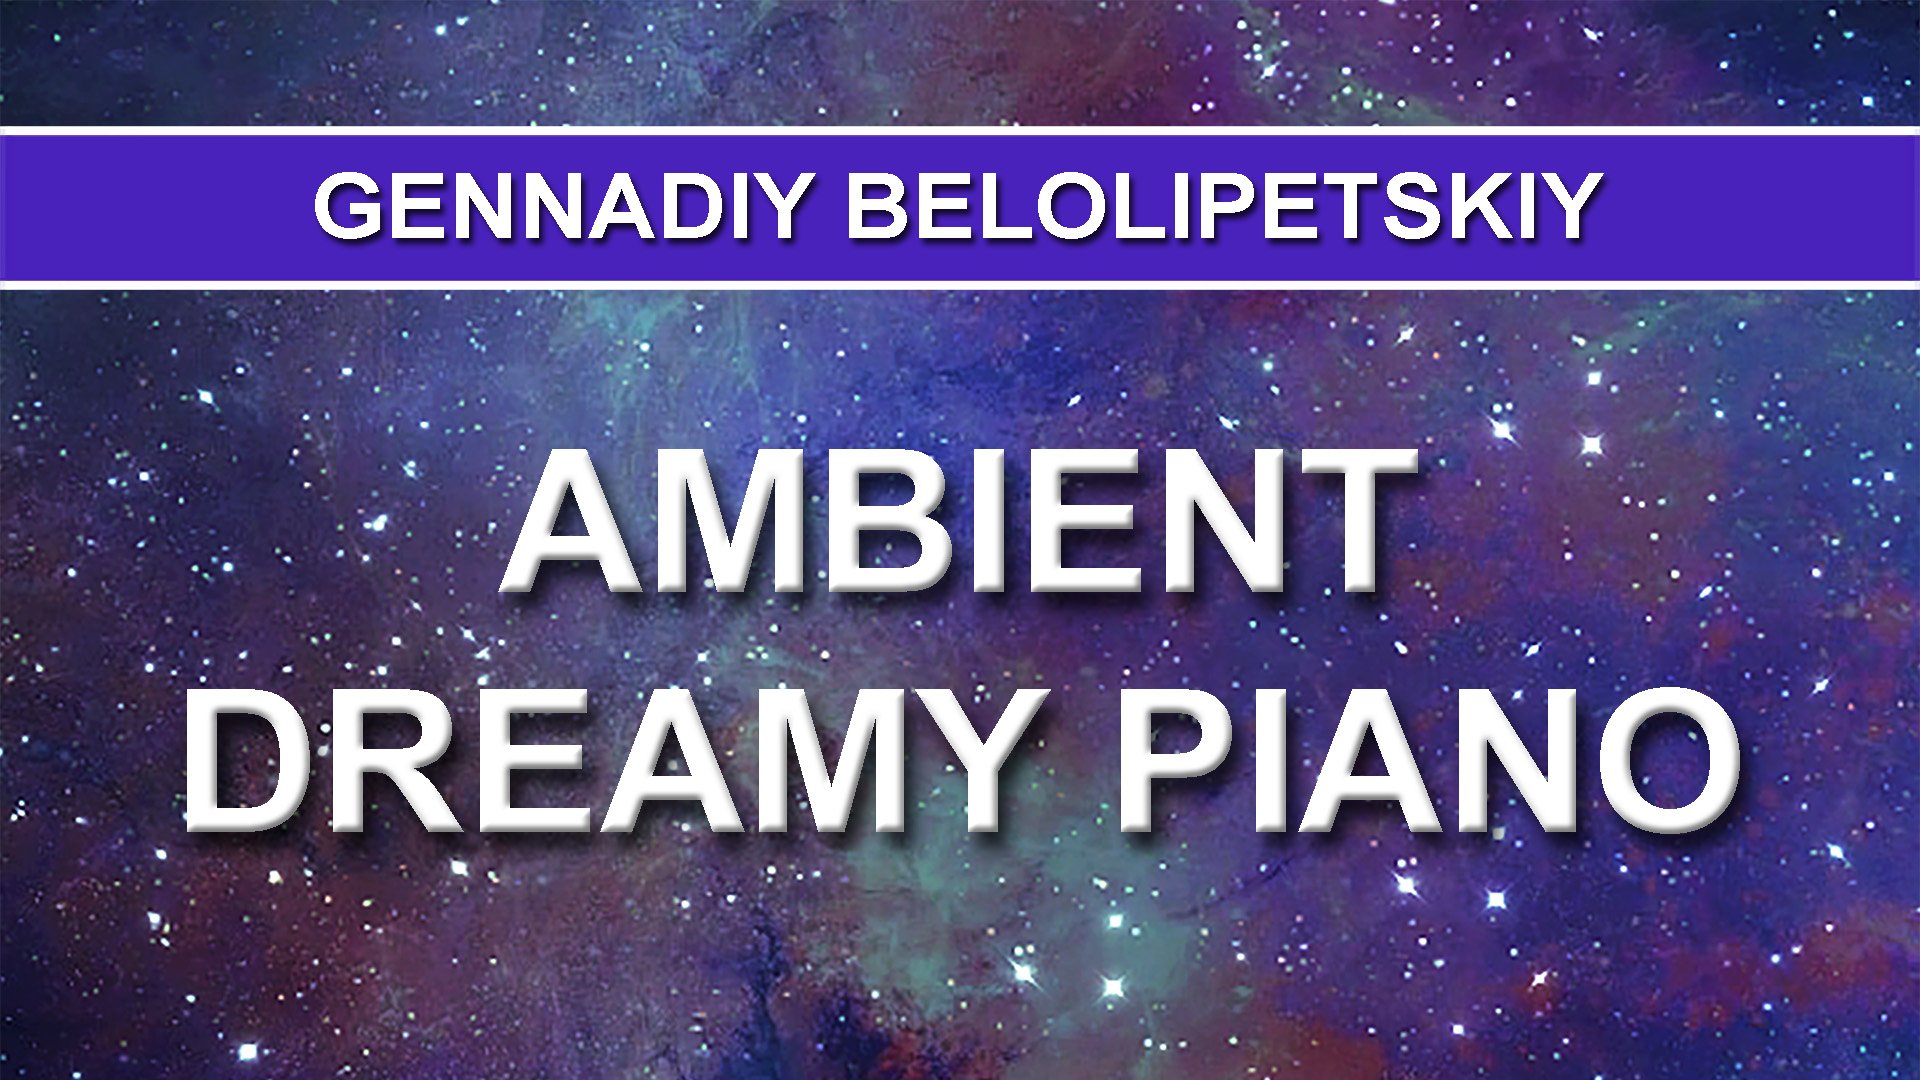 Gennadiy Belolipetskiy - Ambient Dreamy Piano (Ambient music)